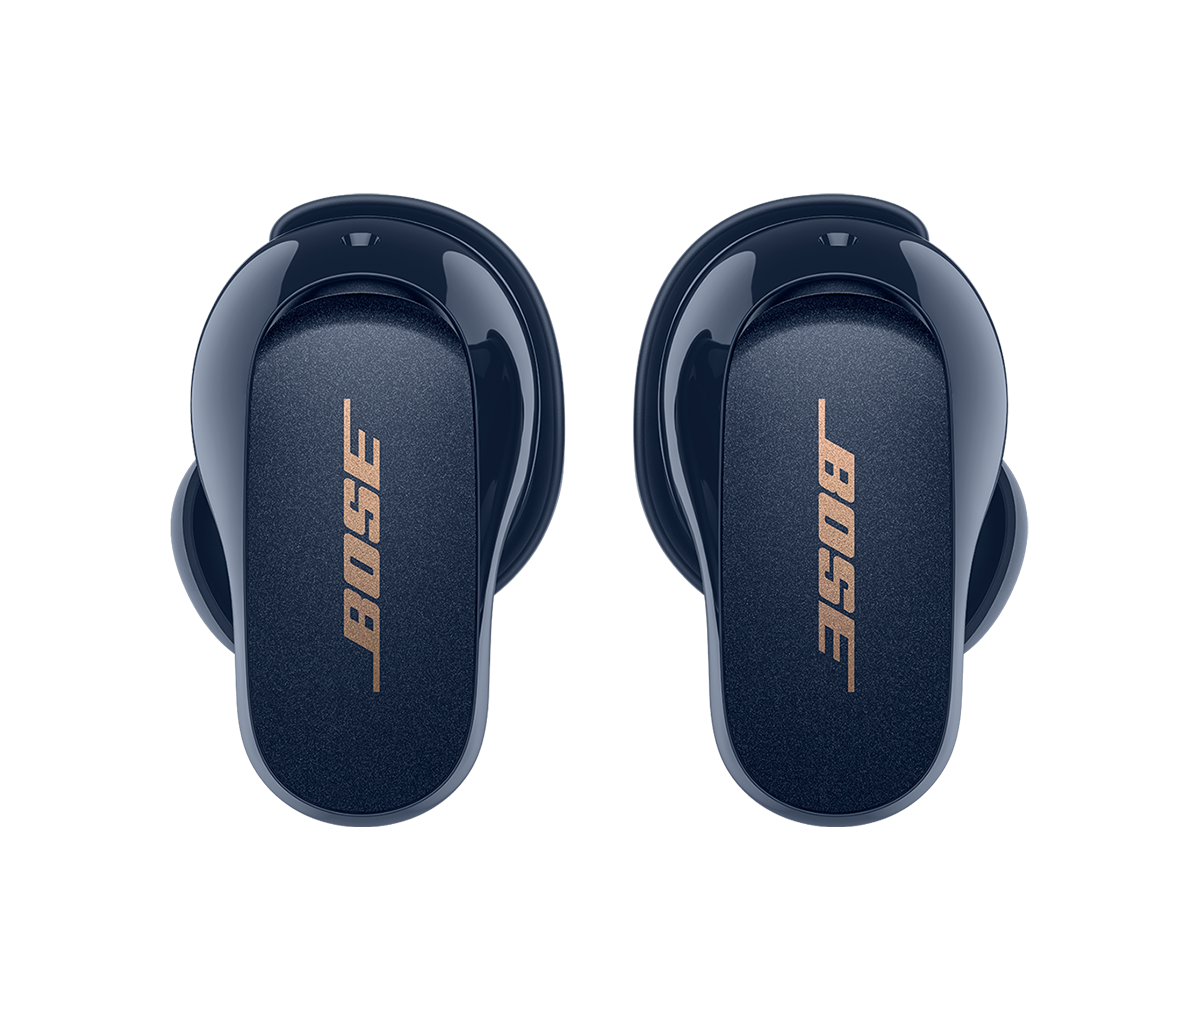 Bose QuietComfort Earbuds II - Remis à Neuf Midnight Blue